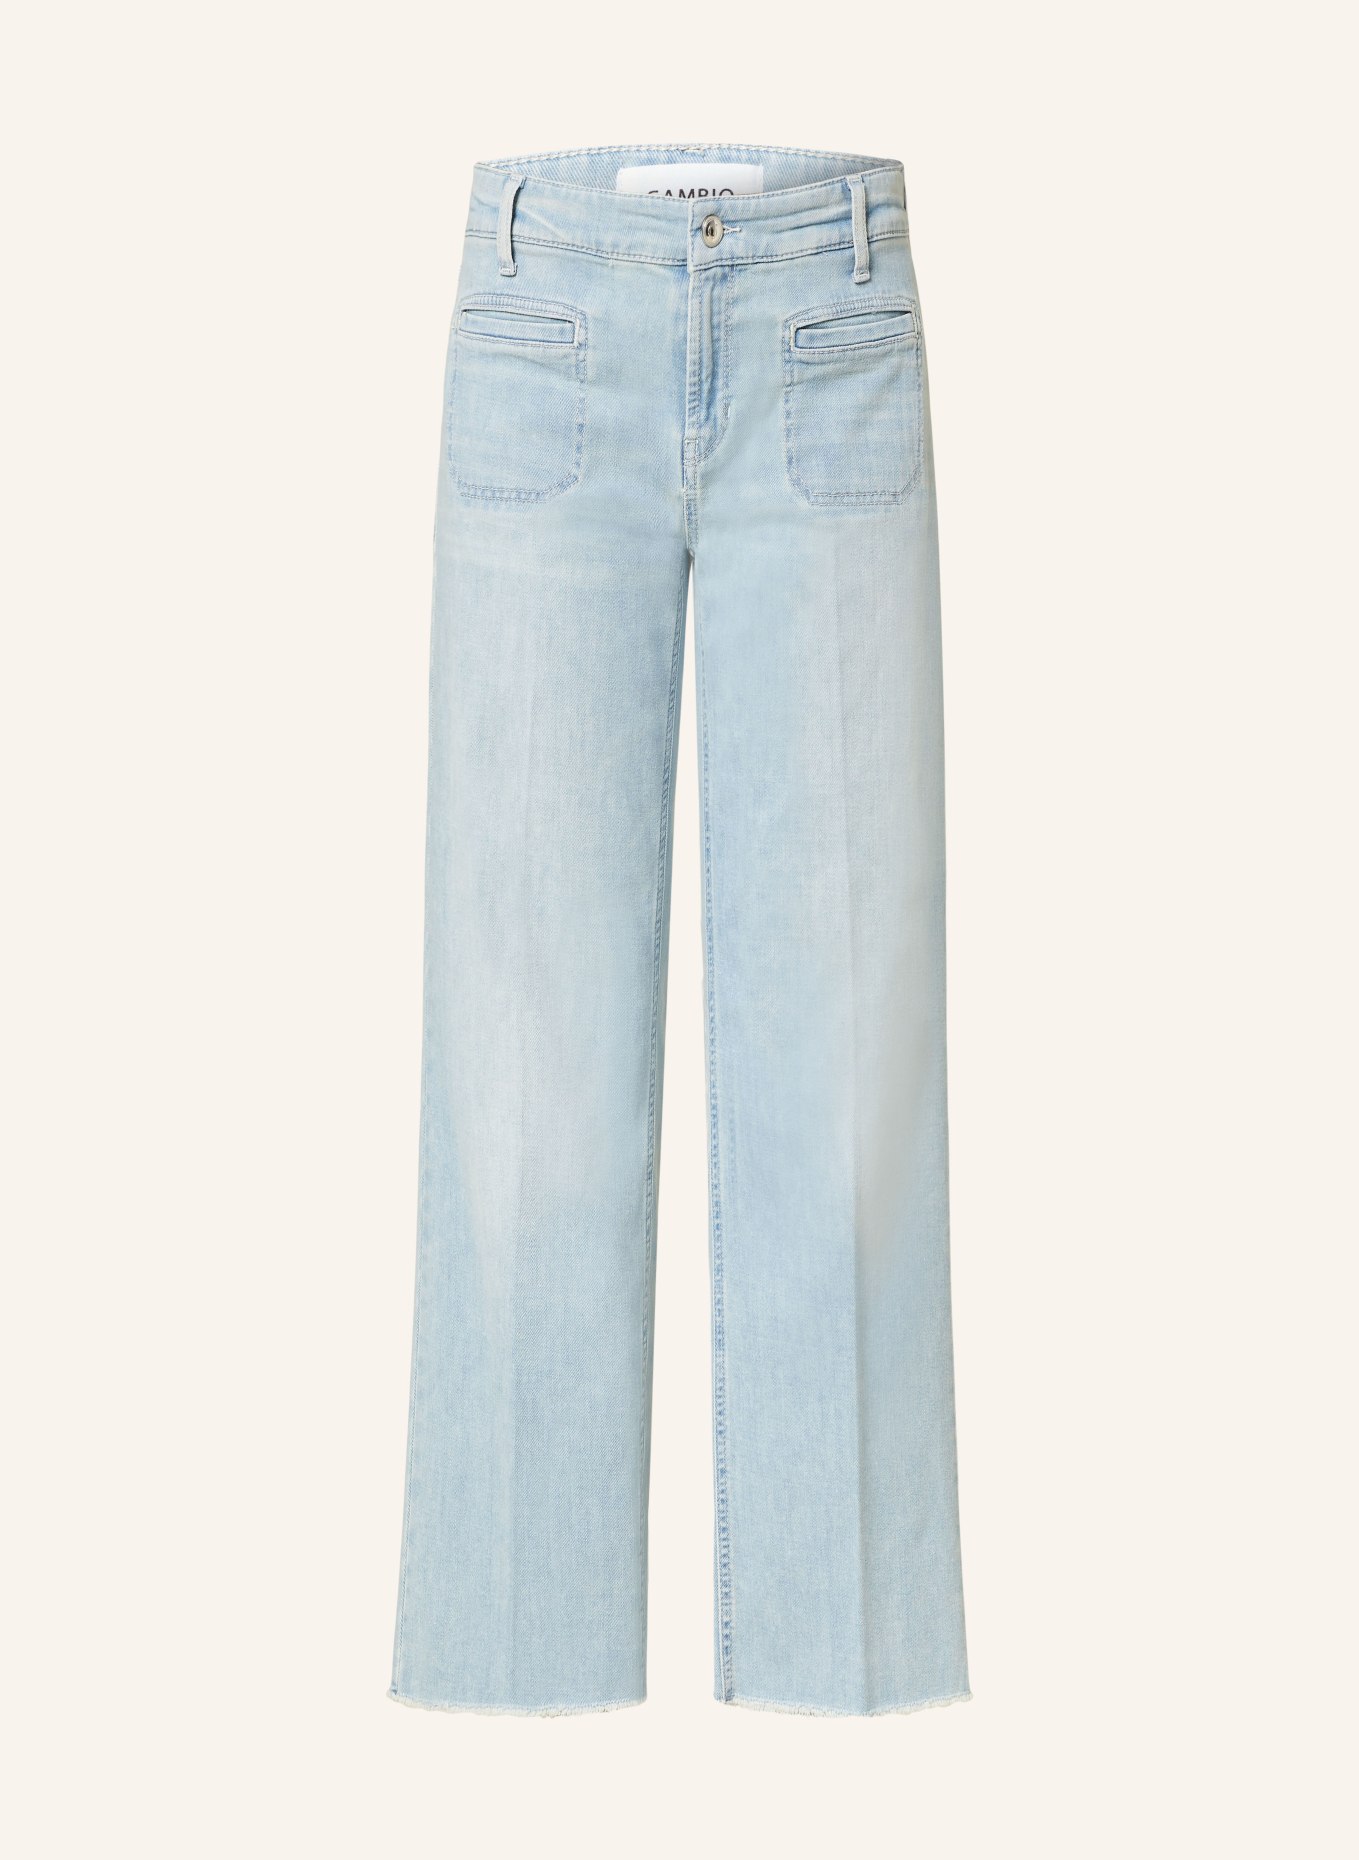 CAMBIO Straight Jeans TESS, Farbe: 5231 lifely bleach contr. frin (Bild 1)